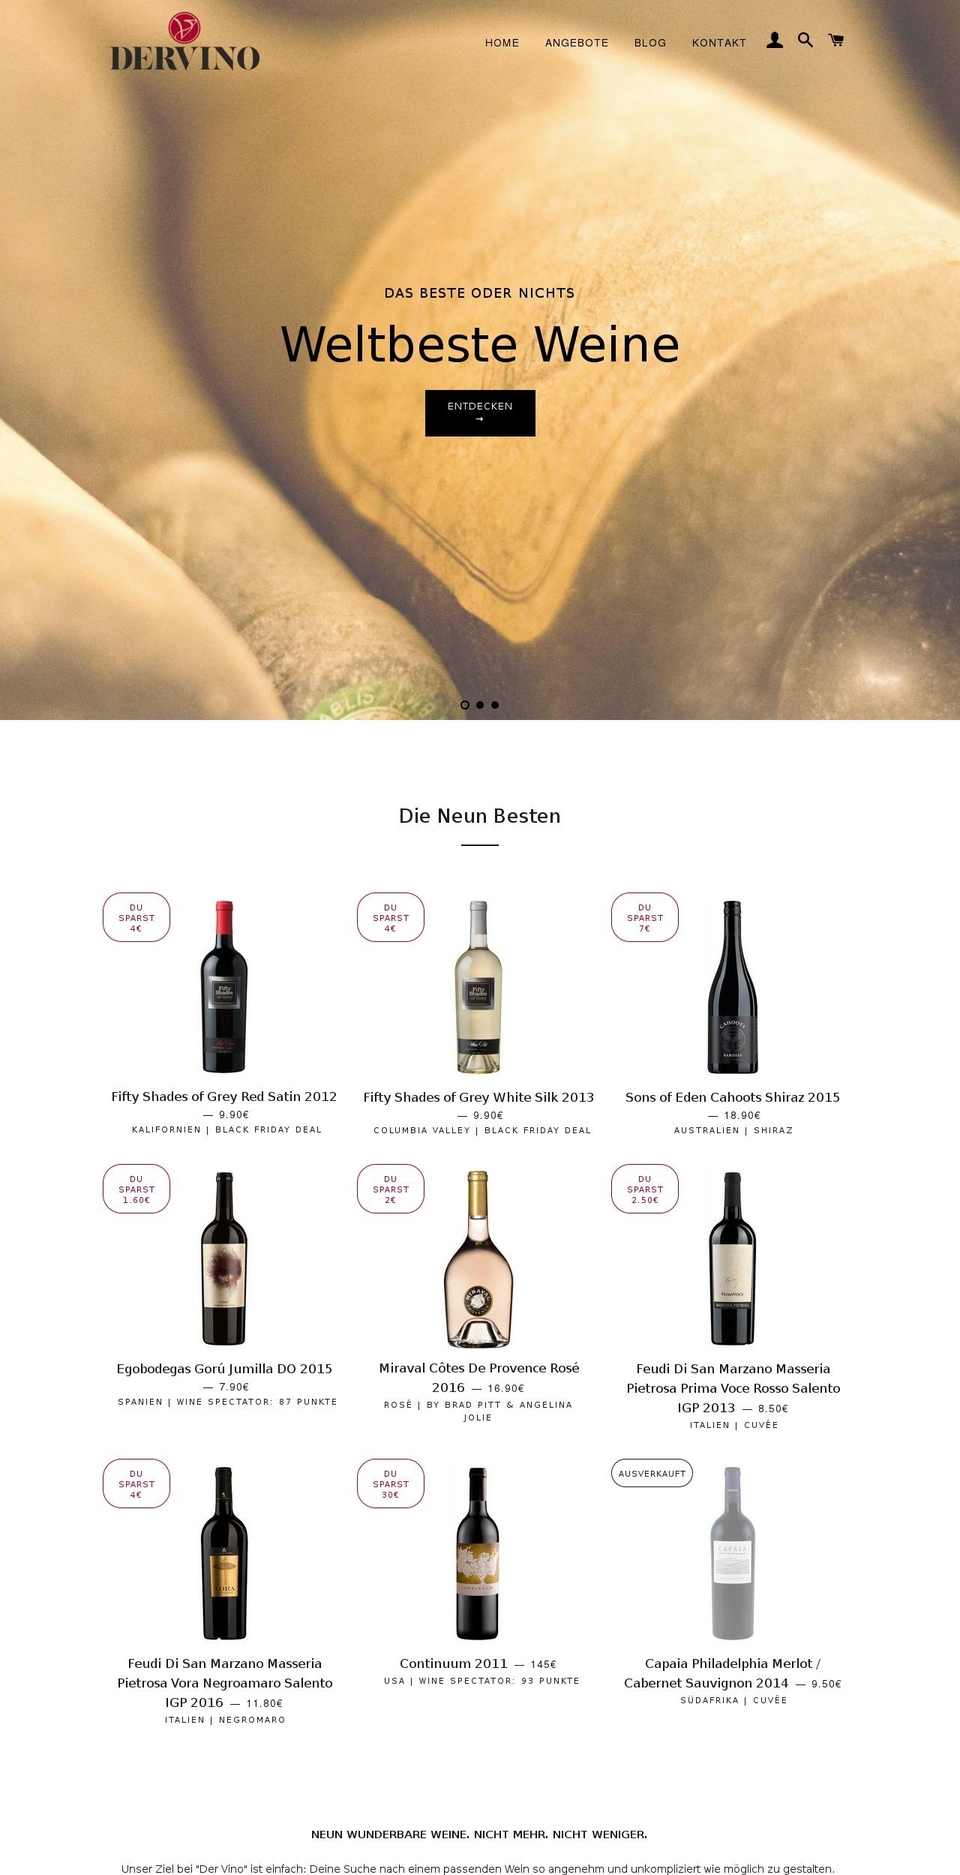 LATEST BACKUP Der Vino Brooklyn Juni 2017 Shopify theme site example dervino.de